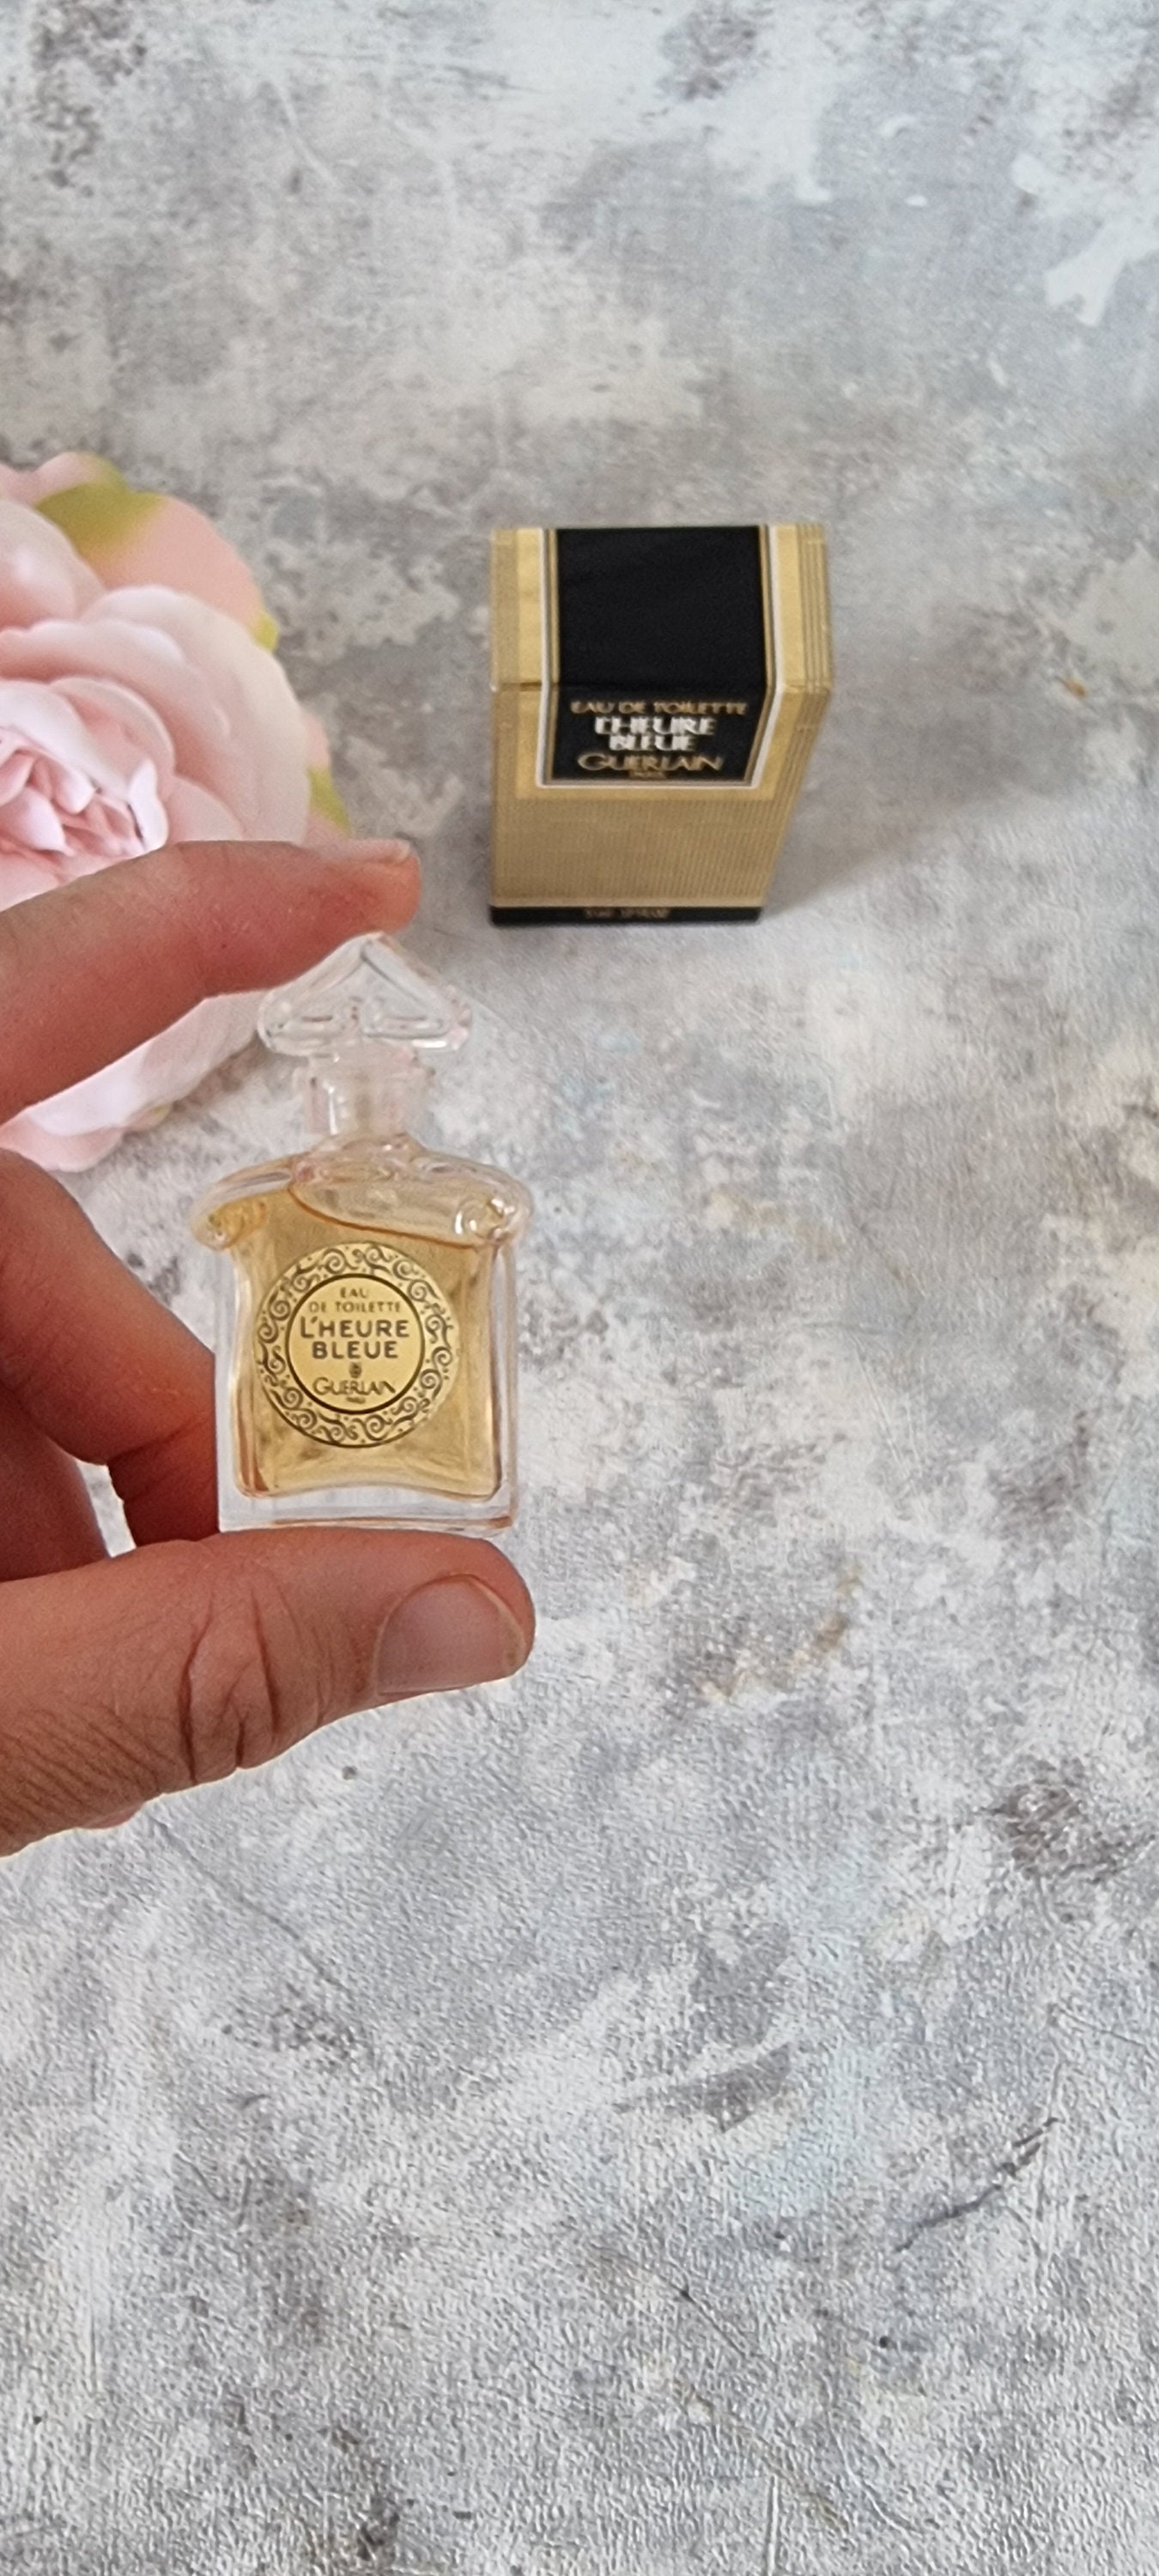 Perfume L'heure Beue De Guerlain 5ml 